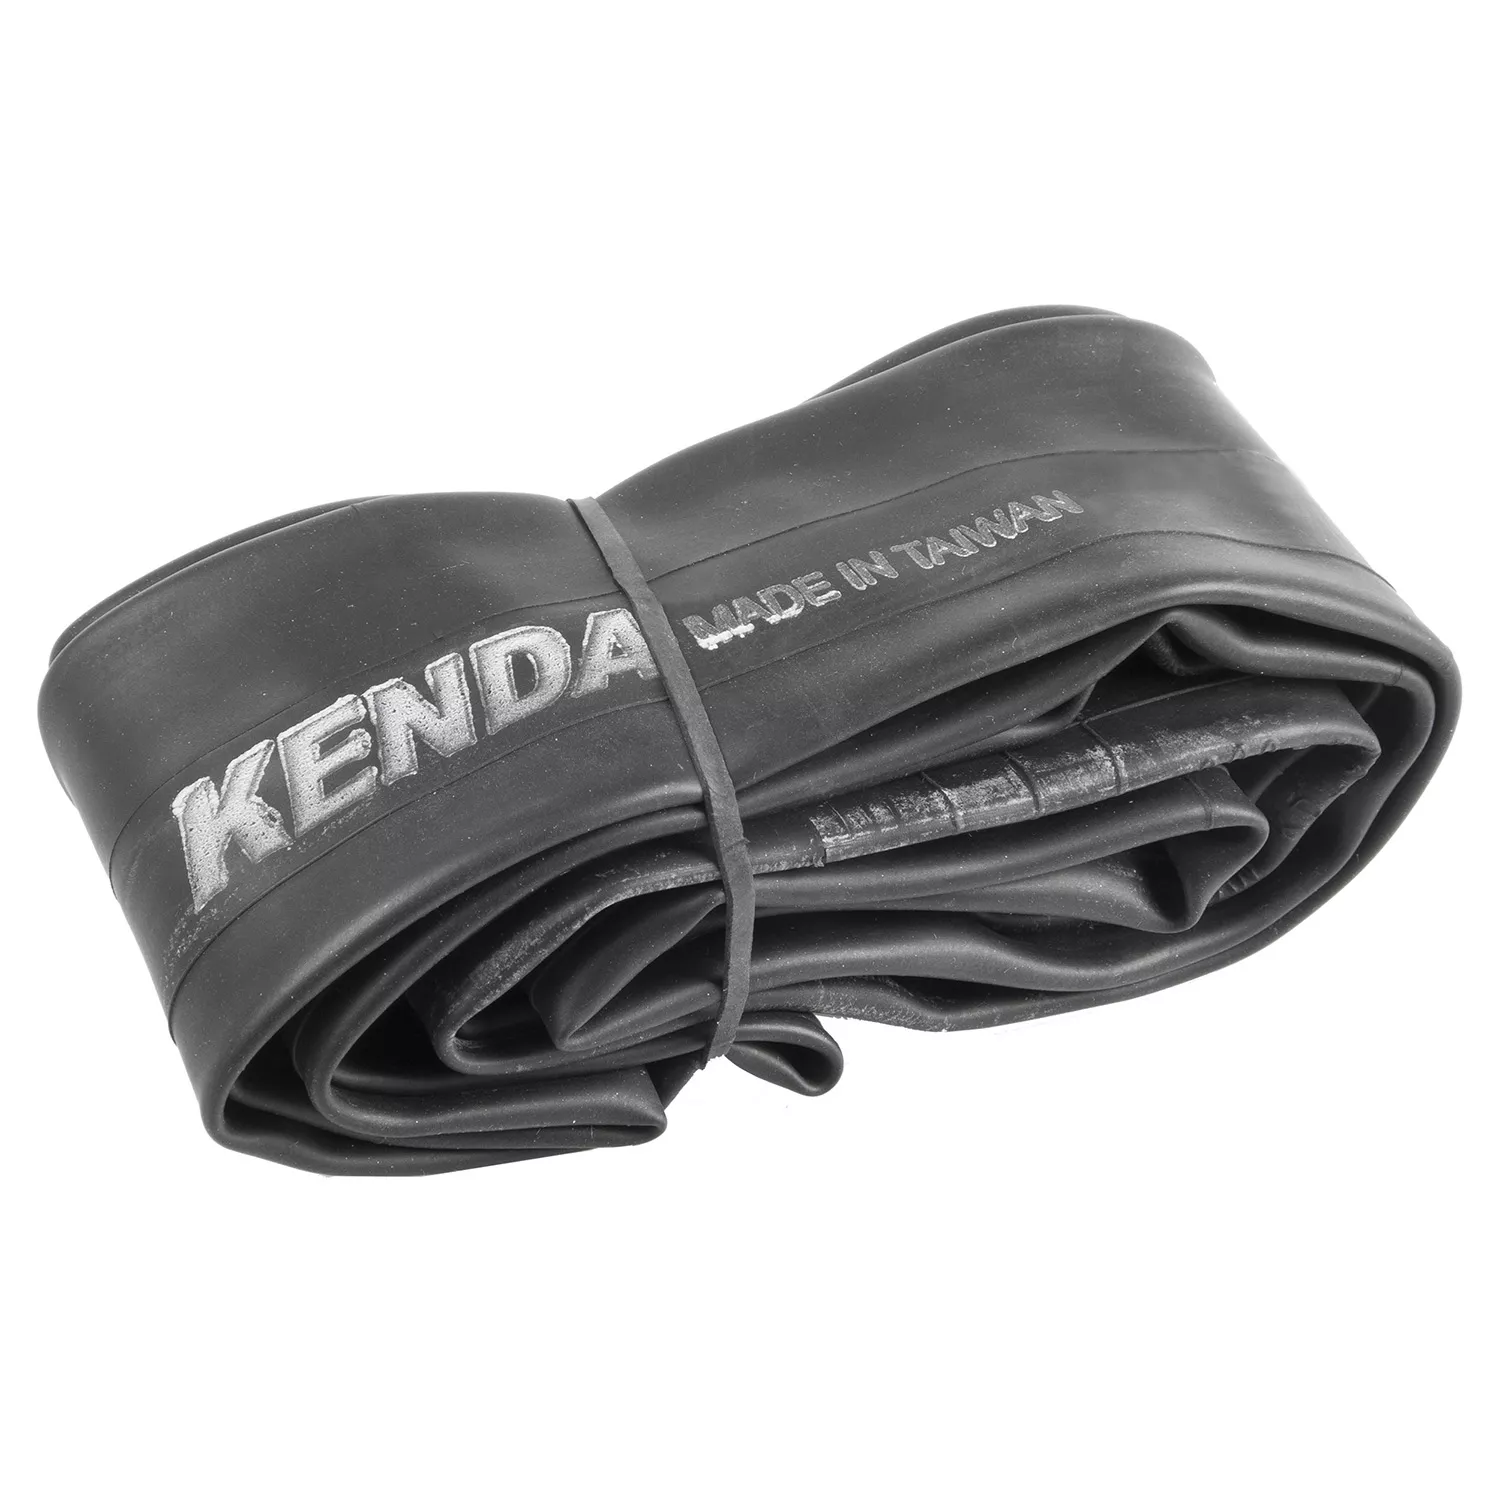 KENDA Ultralite bicycle inner tube 26 inch x 1.9 -2.125 inch FV